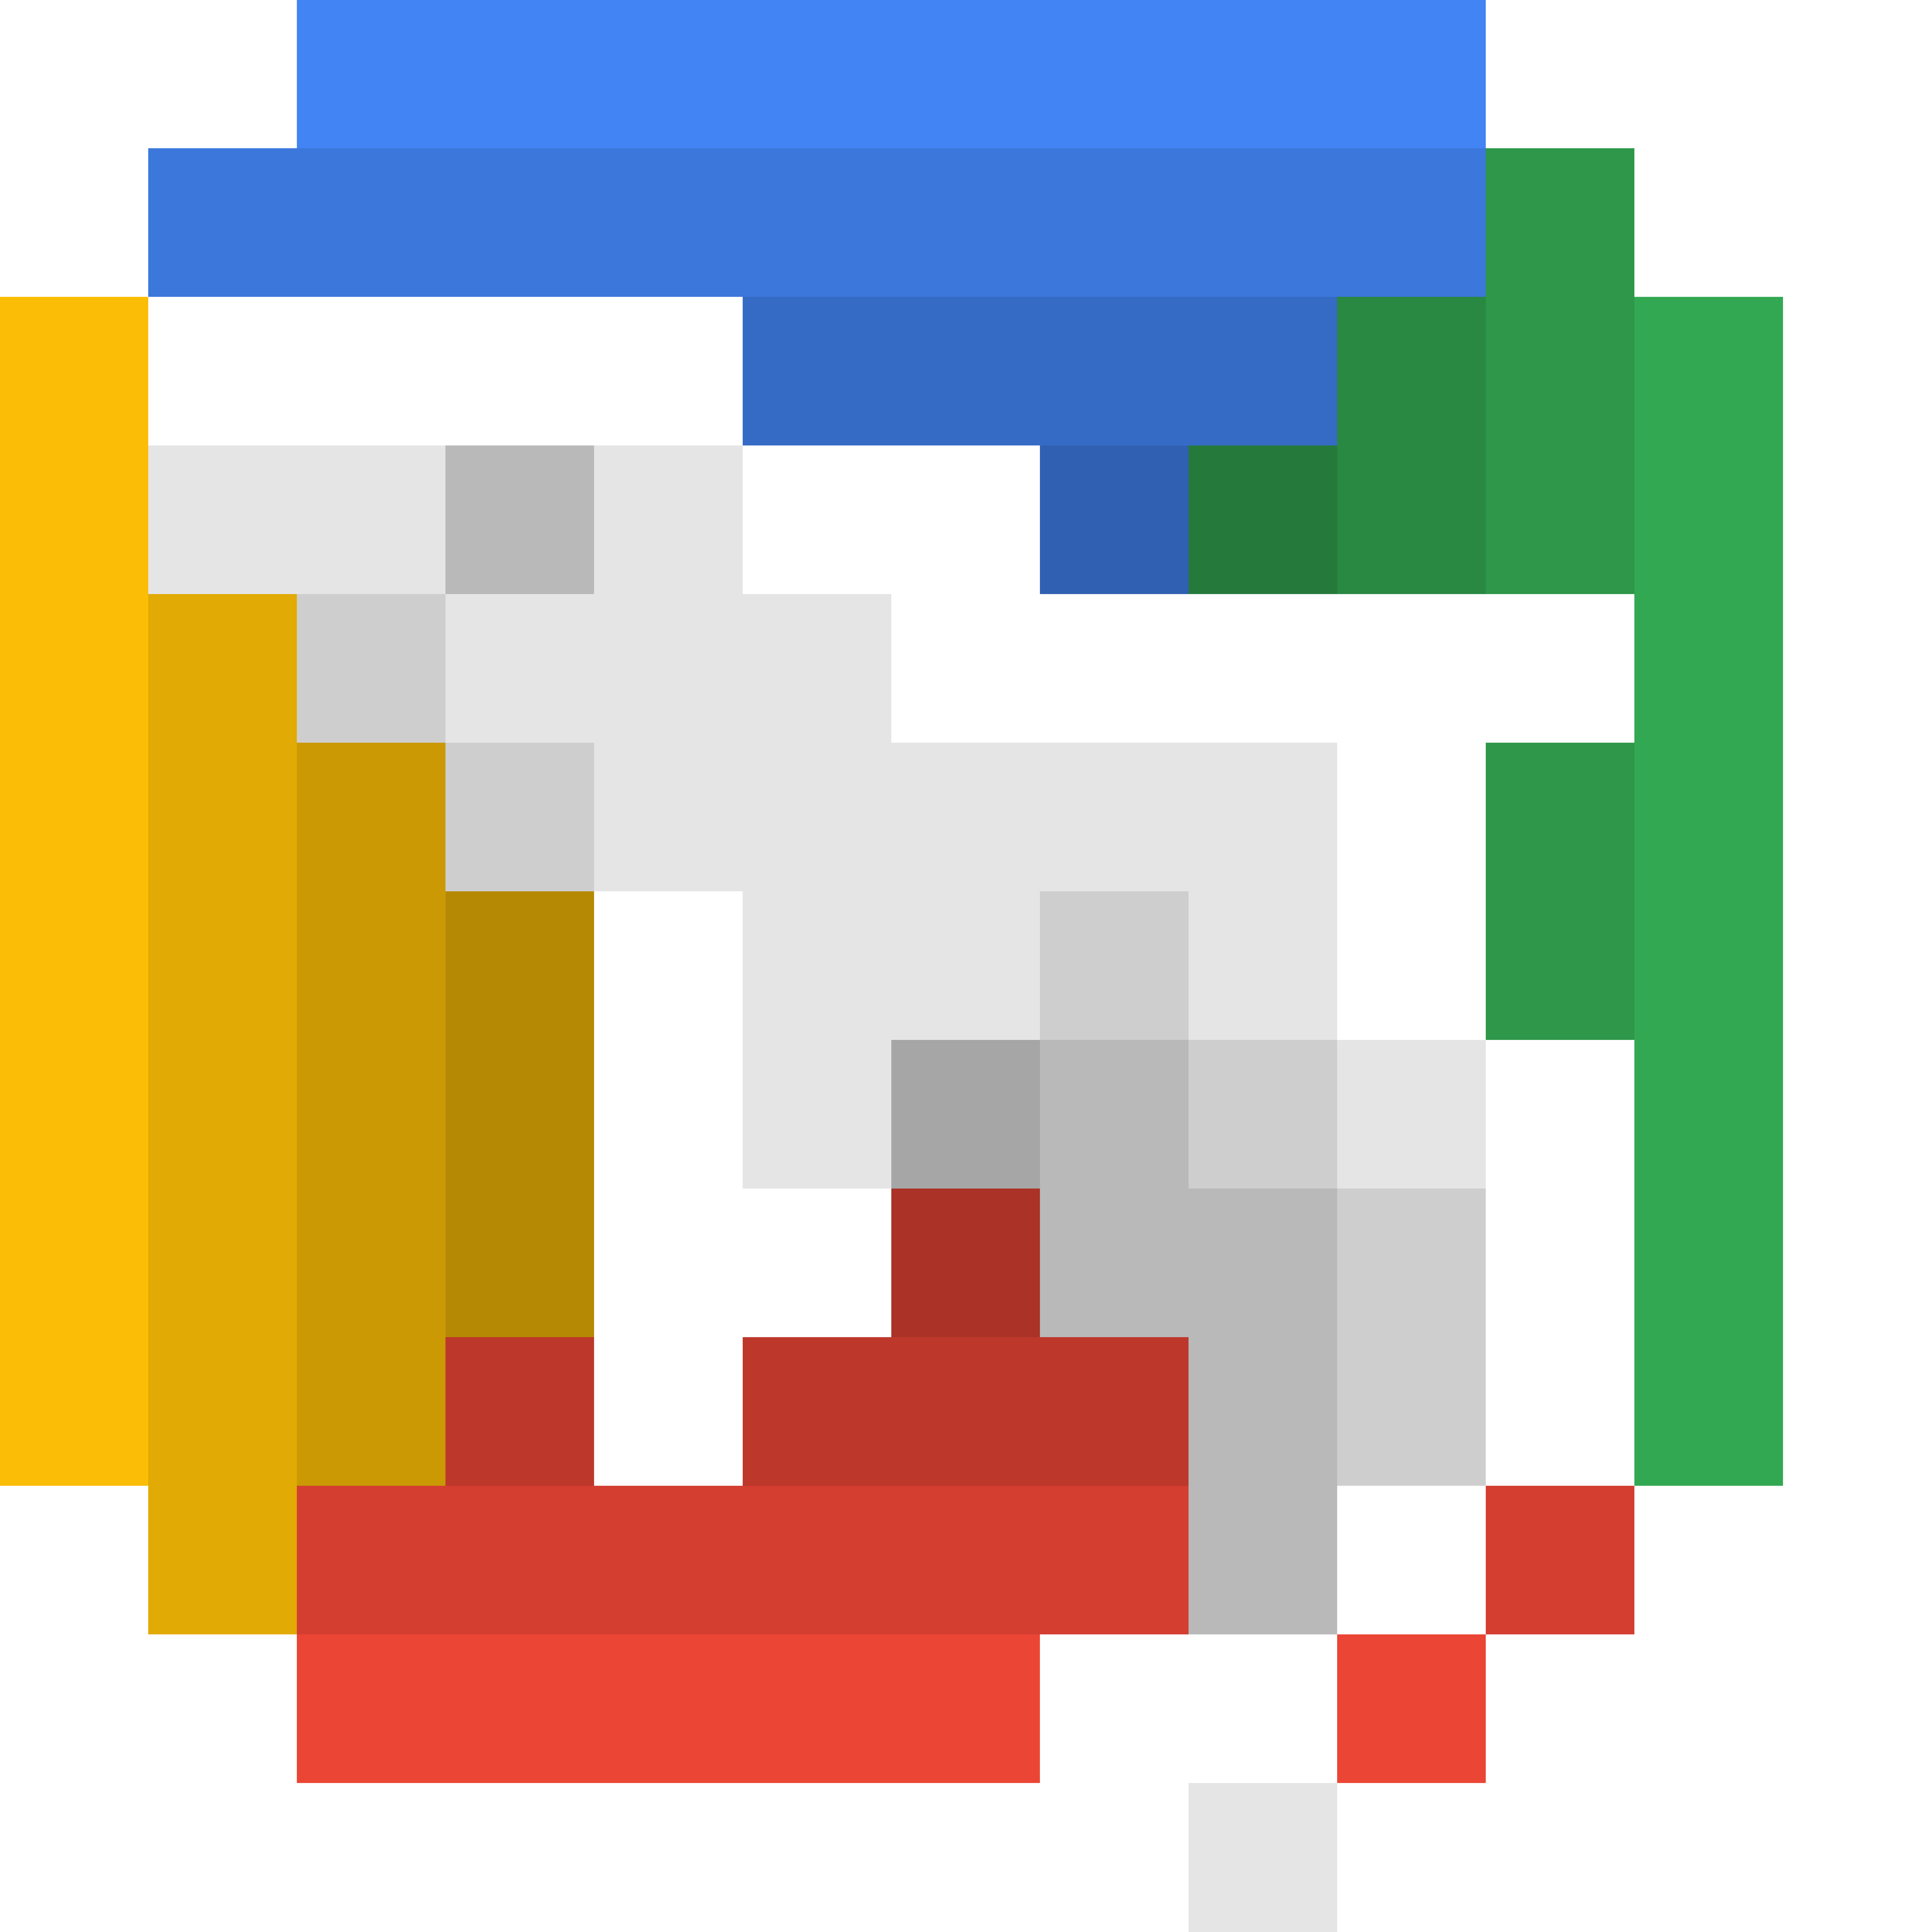 General 9997x9997 logo minimalism pixelated colorful blurred digital art simple background pixels pixel art